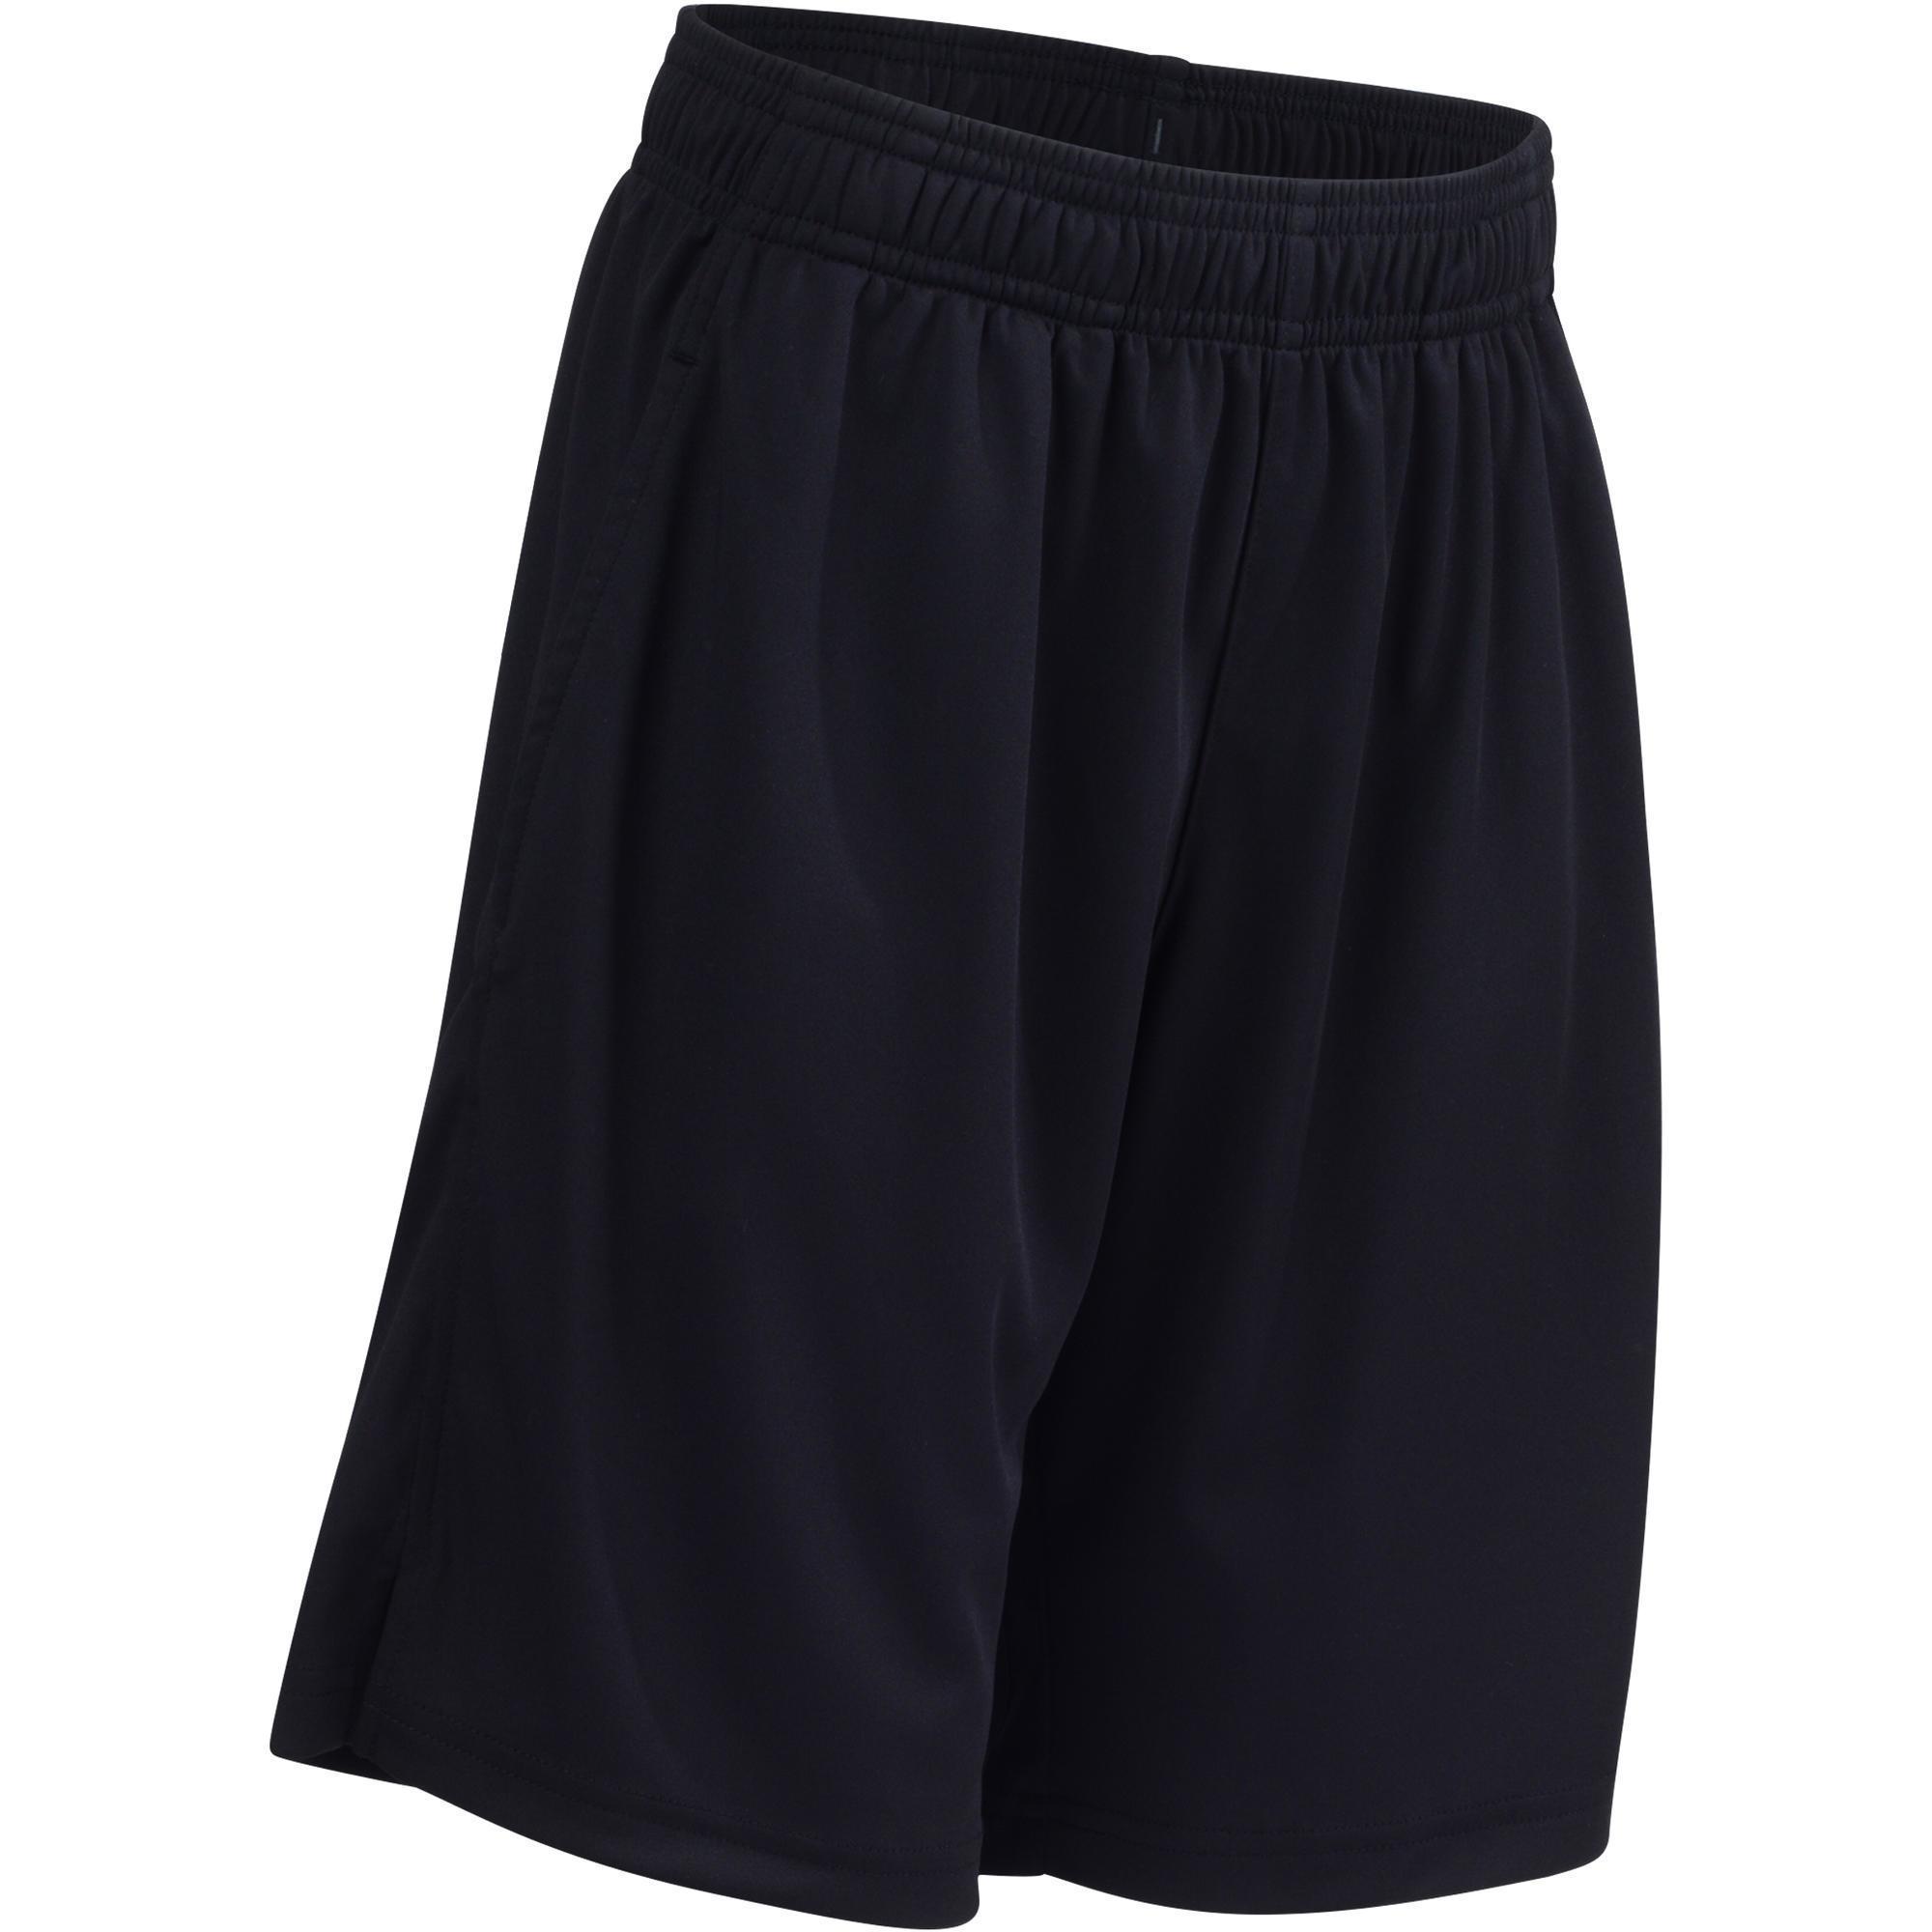 decathlon black shorts